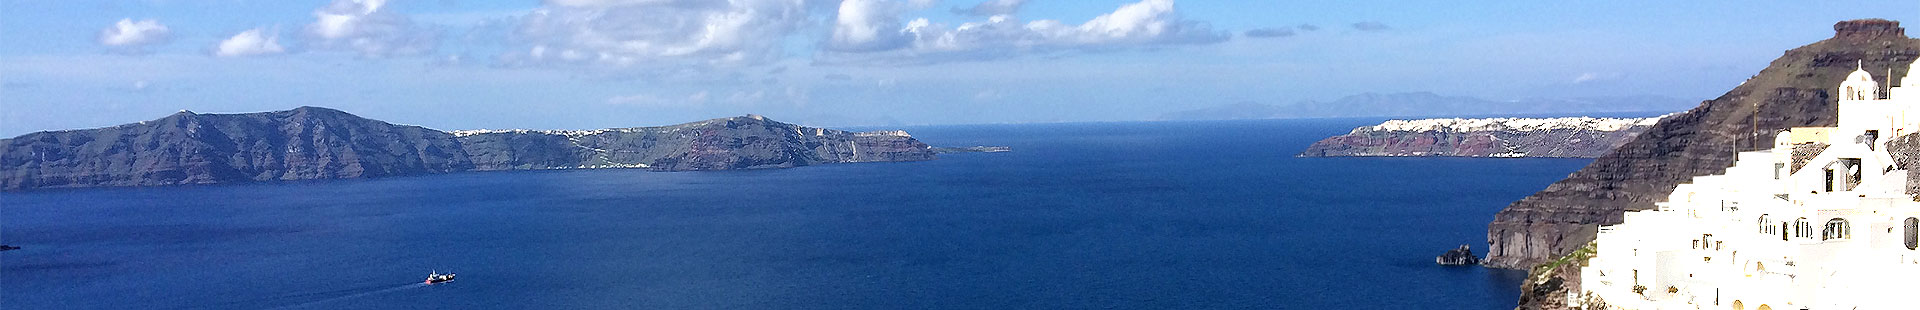 View of Santorini Island Greece